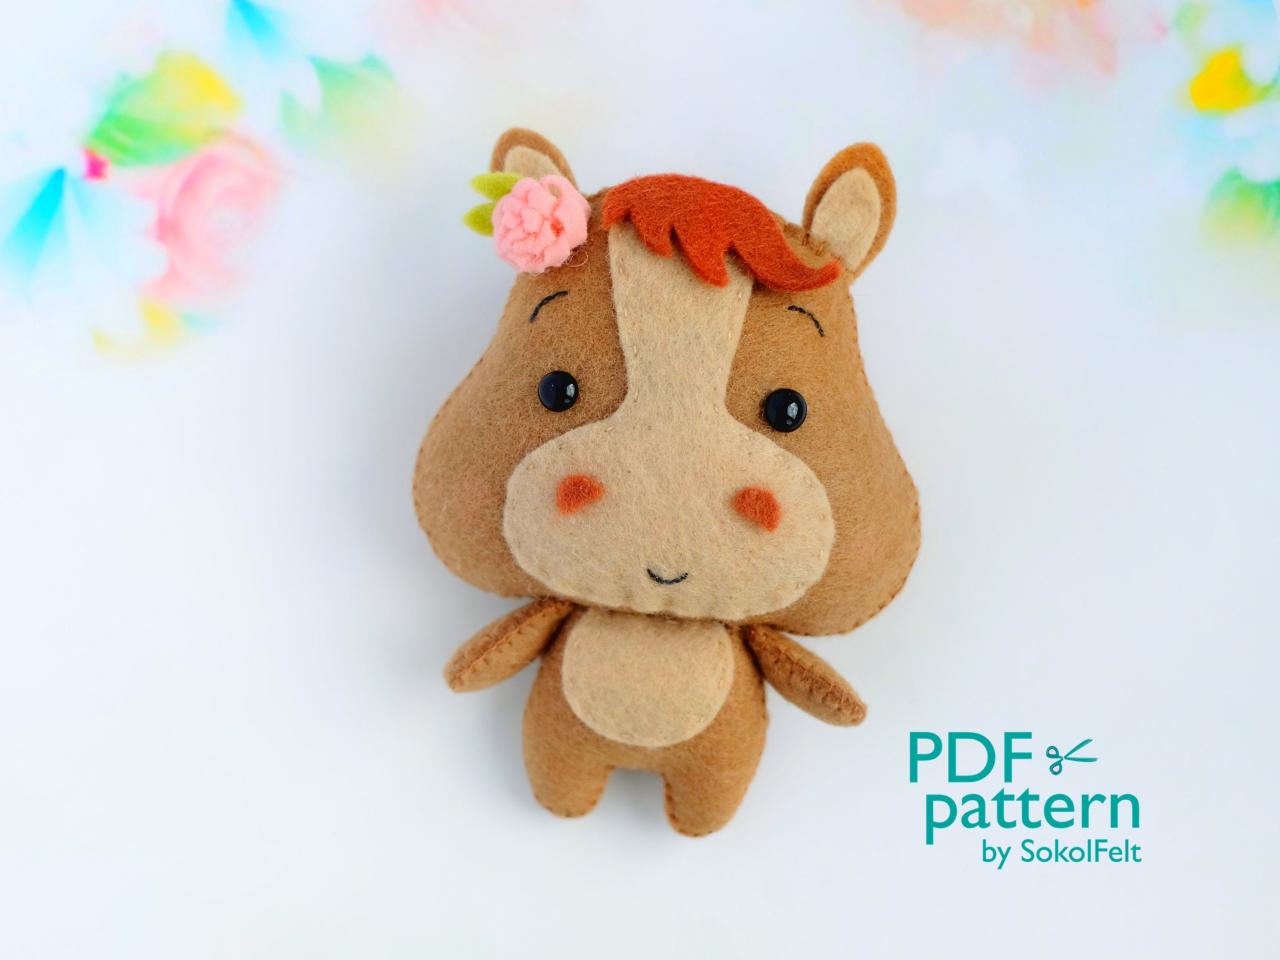 Felt baby horse toy sewing PDF pattern, Cute farm animal, Felt foal digital instant download tutorial, Baby crib mobile toy.